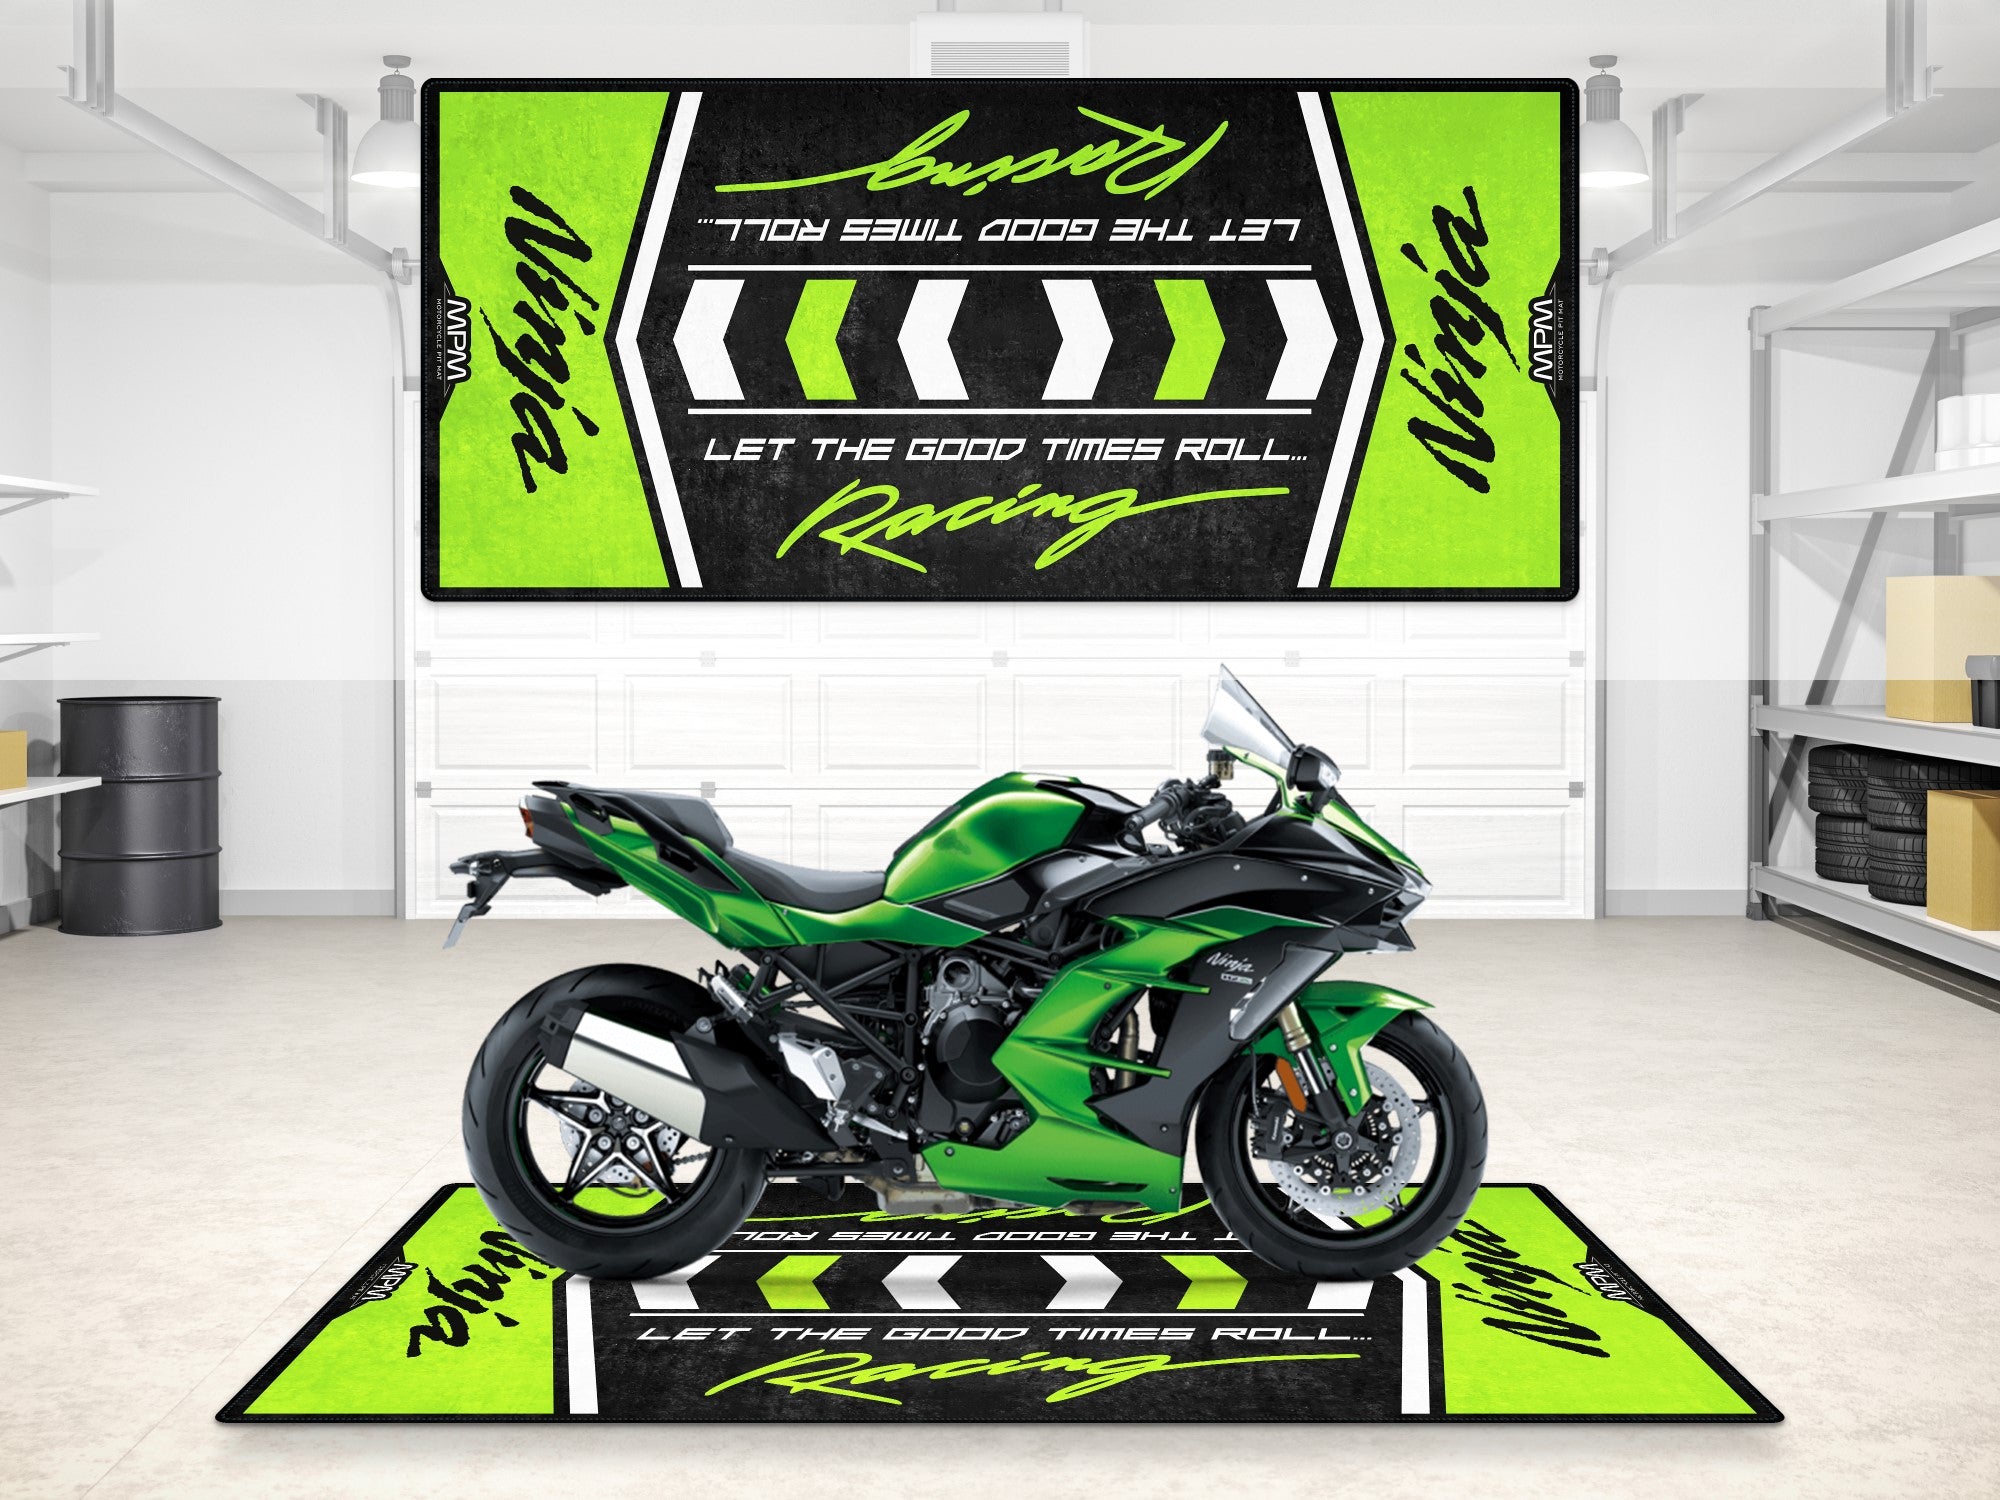 Kawasaki Motorcycle Mat - Personalized Garage Floor Display Mat 